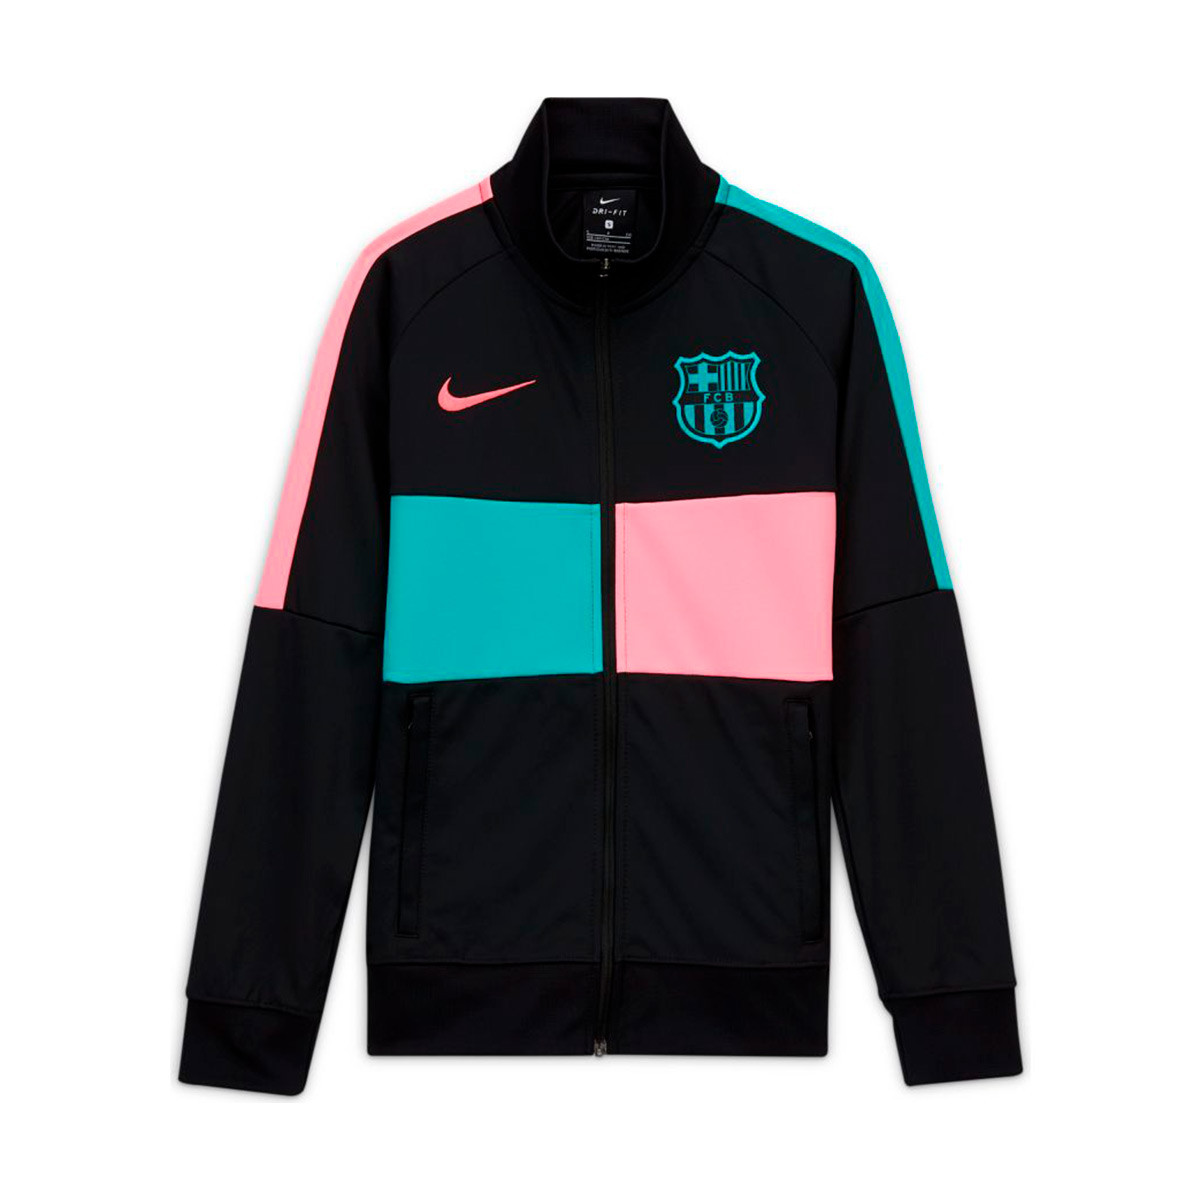 barcelona i96 jacket